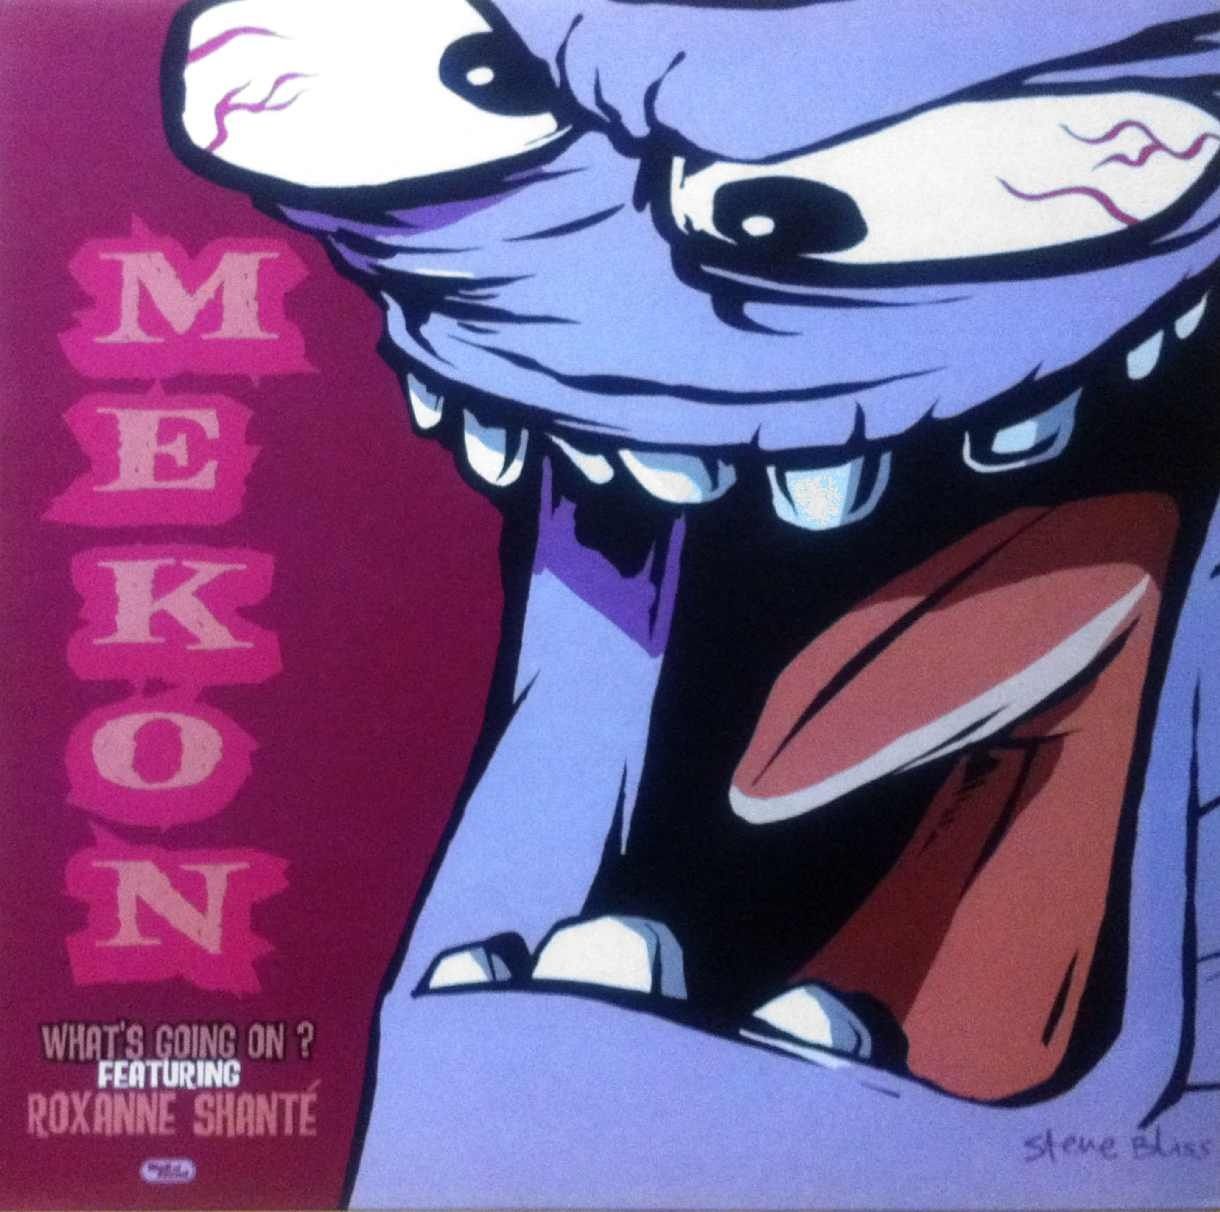 MEKON / WHAT'S GOING ON